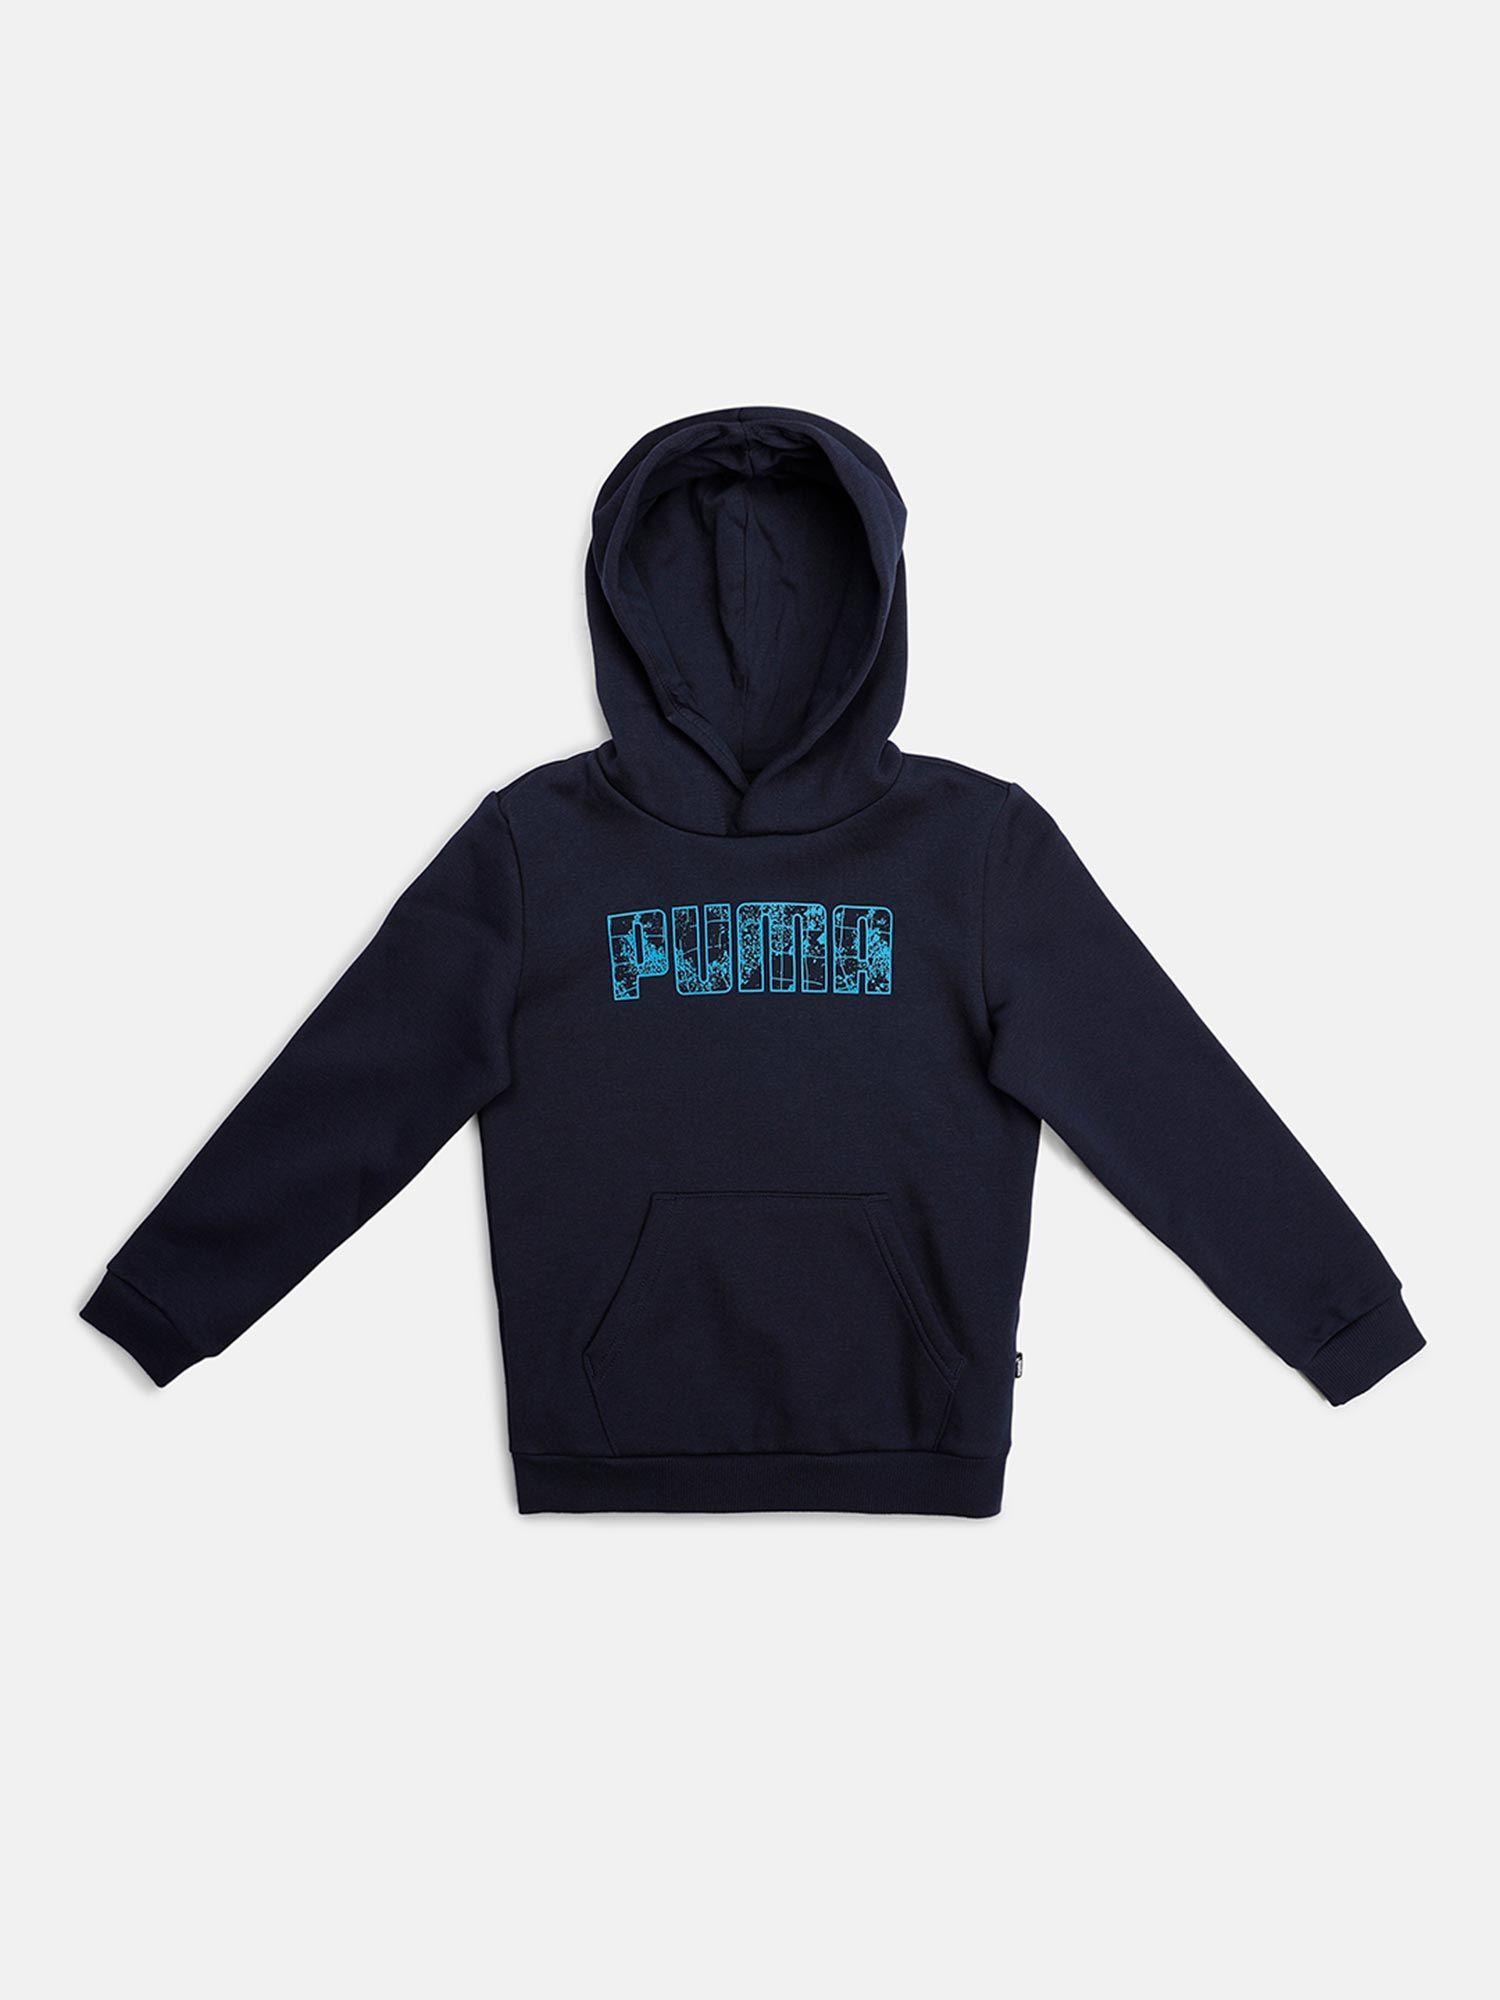 graphic-kid's-hoodie